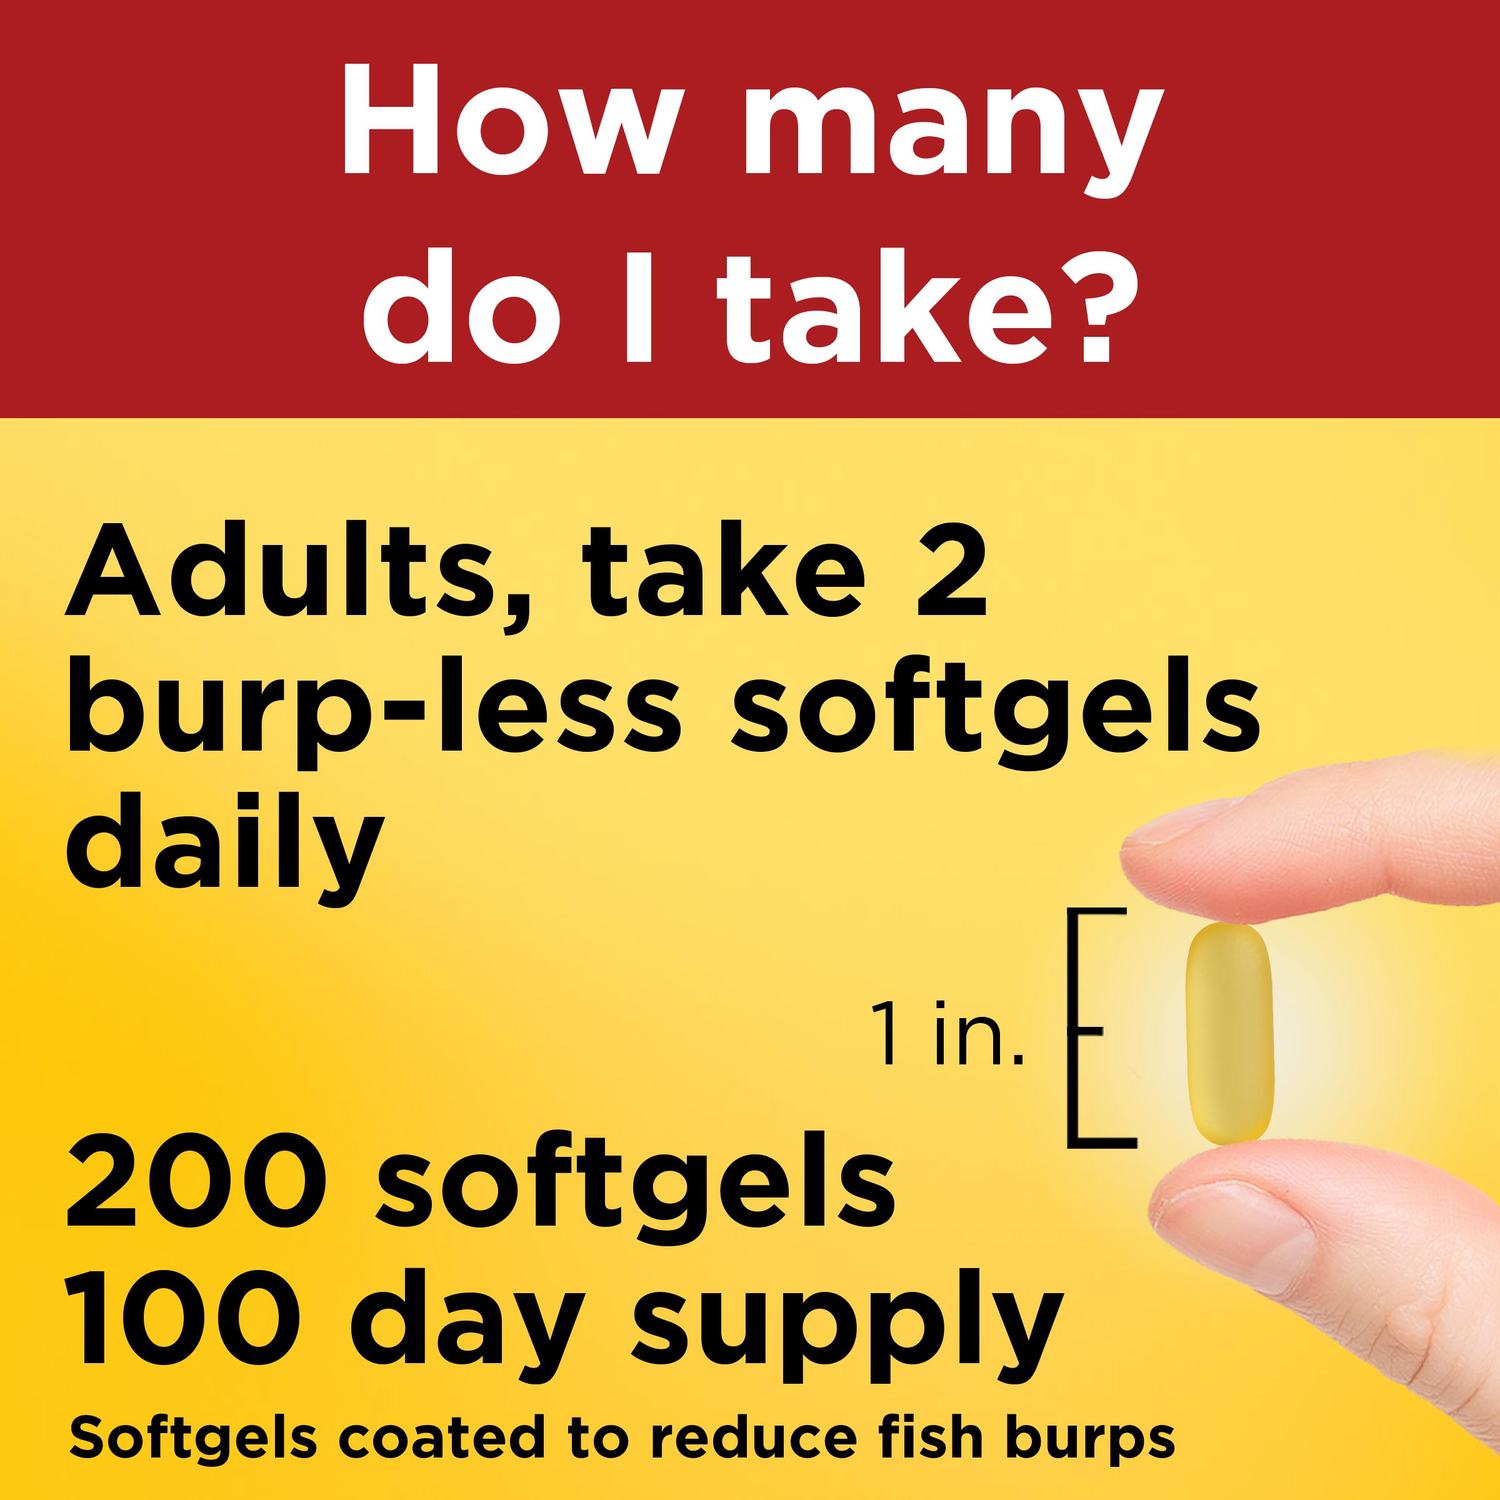 Burp-Less♦ Fish Oil 1200 mg Softgels | 200